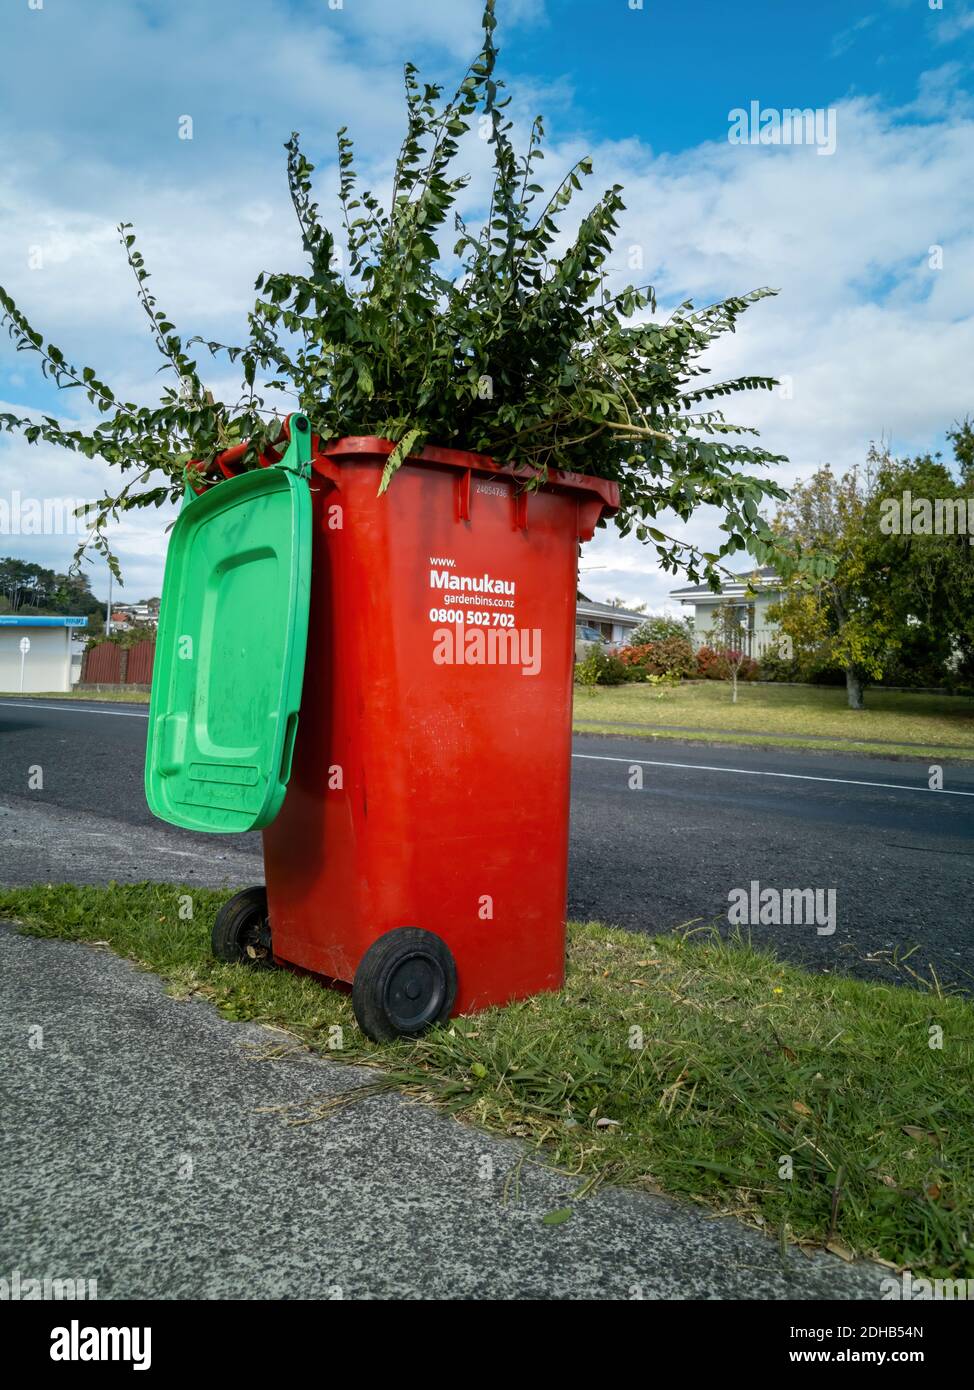 AUCKL, NEW ZEALAND - Mar 31, 2020: Auckland / New Zealand - March 29 2020: View of red Manukau garden waste bin Stock Photo